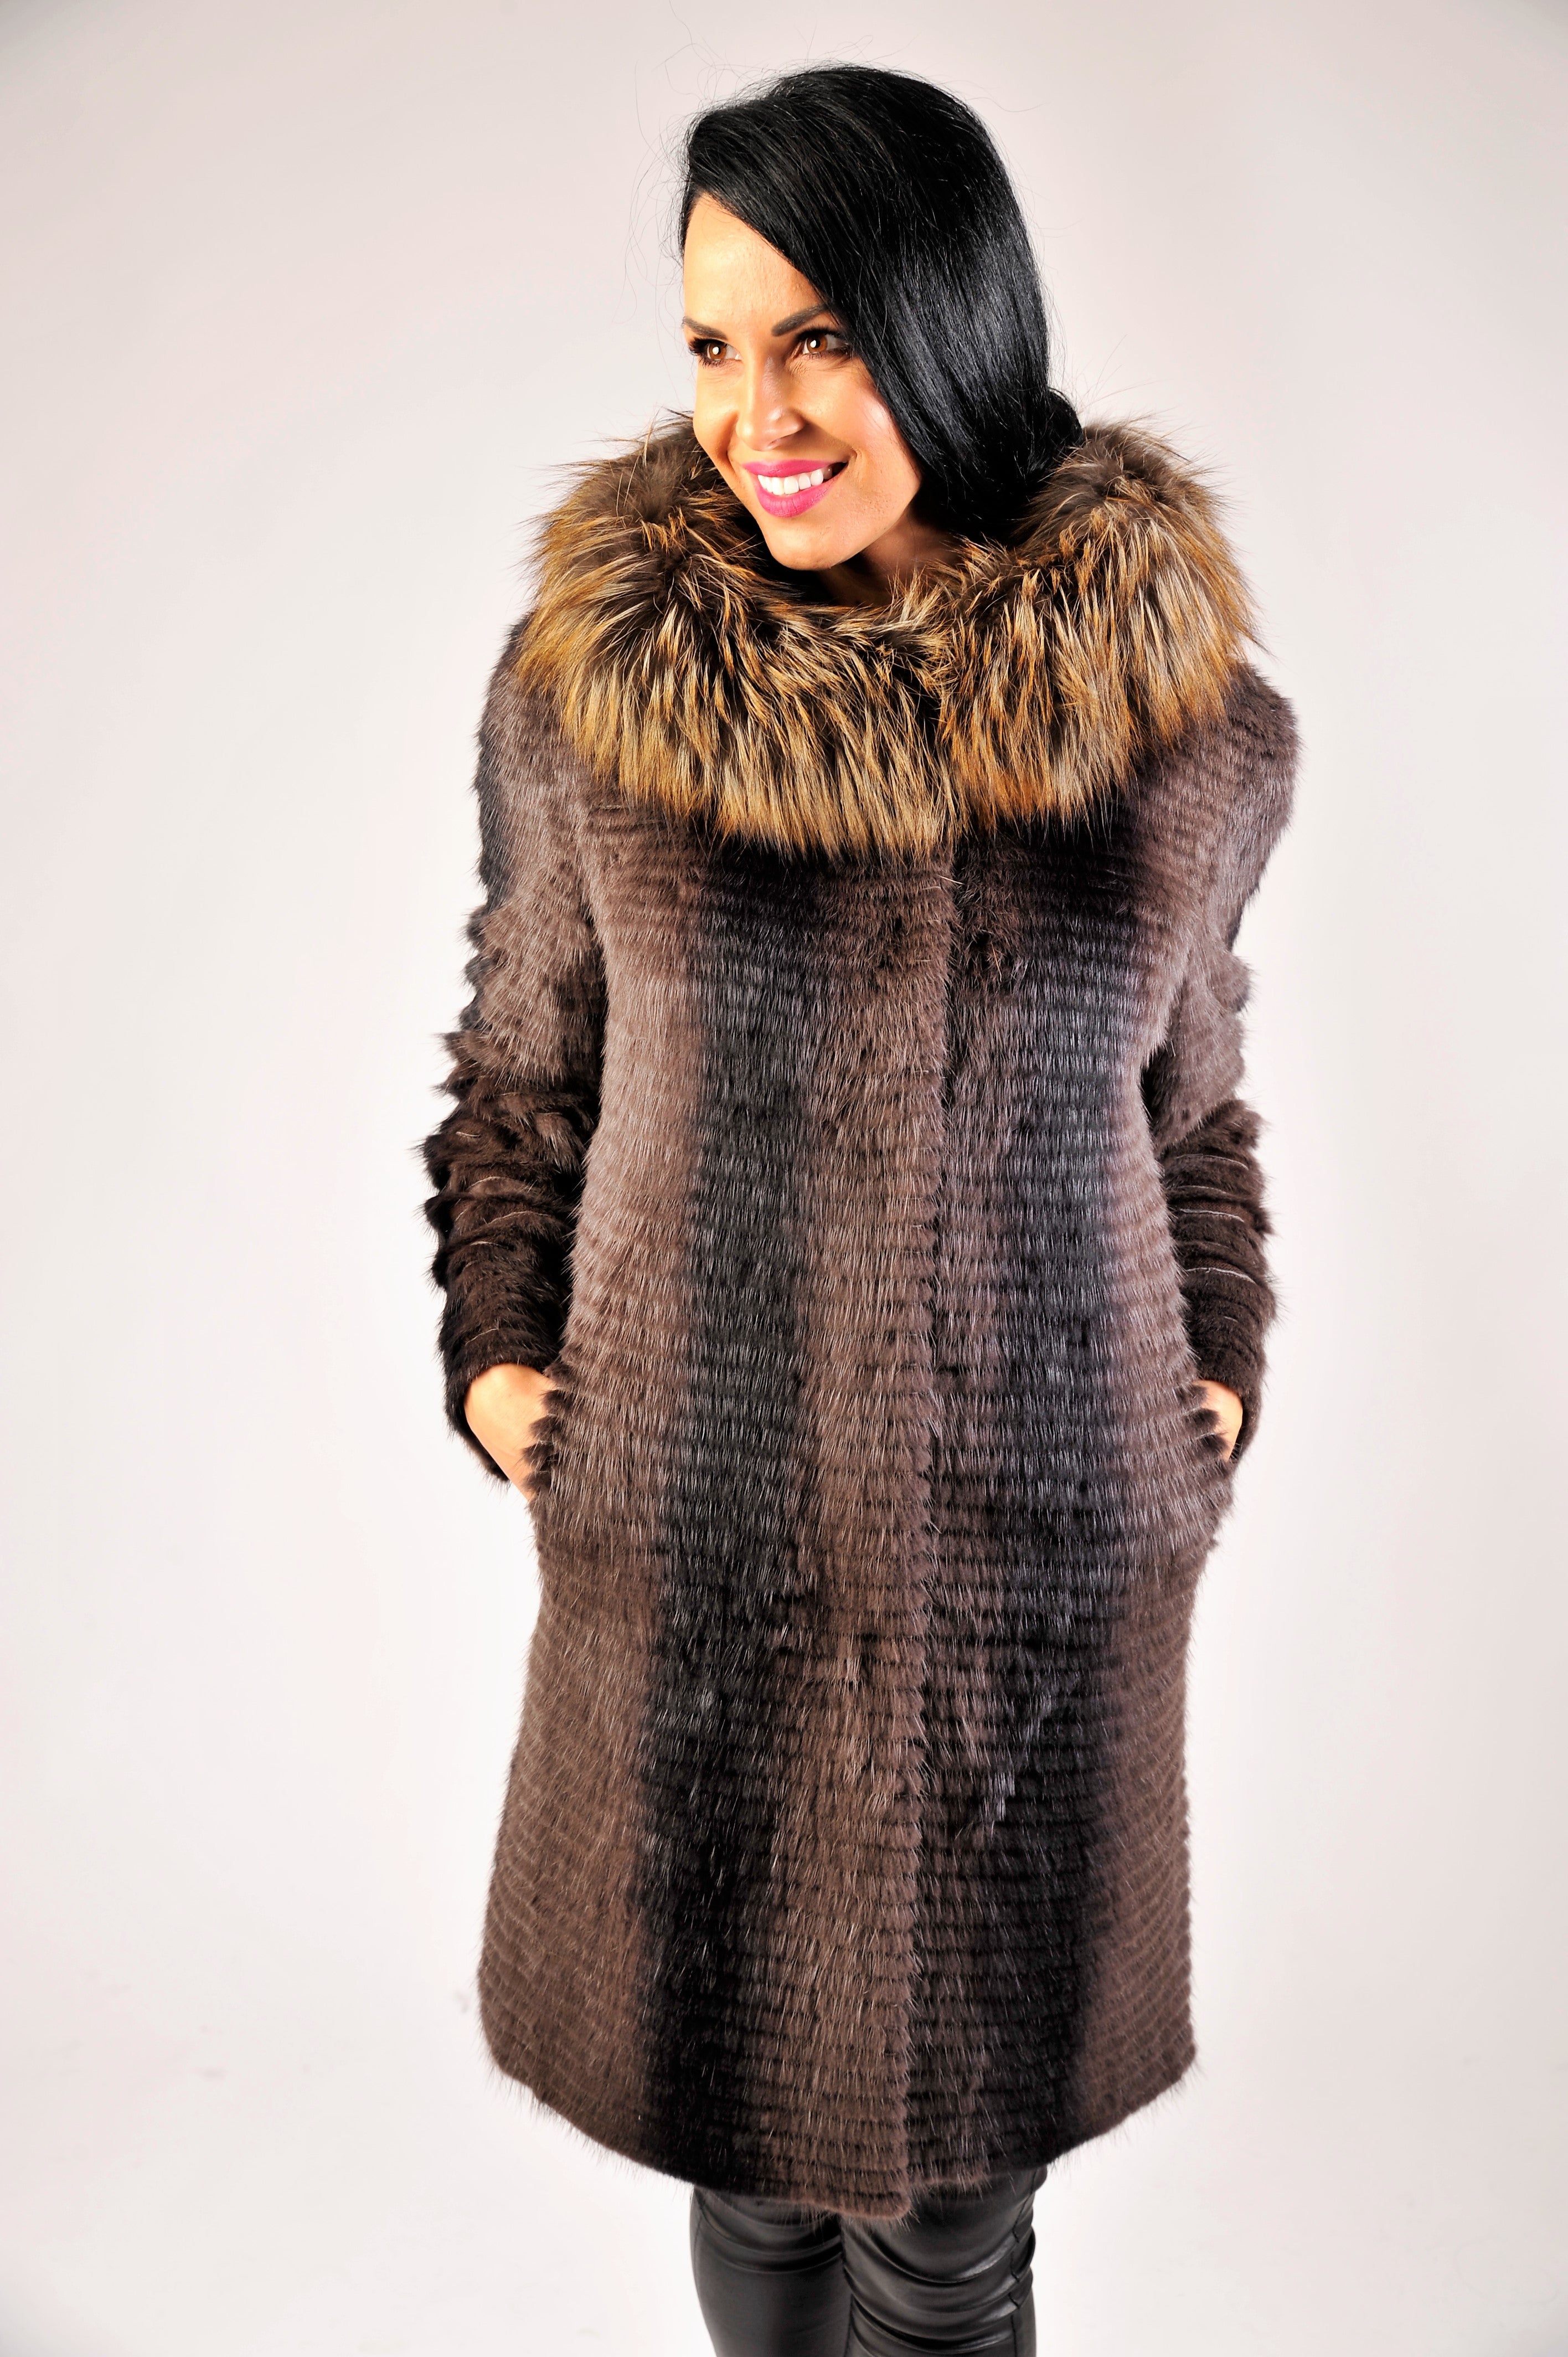 Hooded Fur Pullover Women Coat in Brown